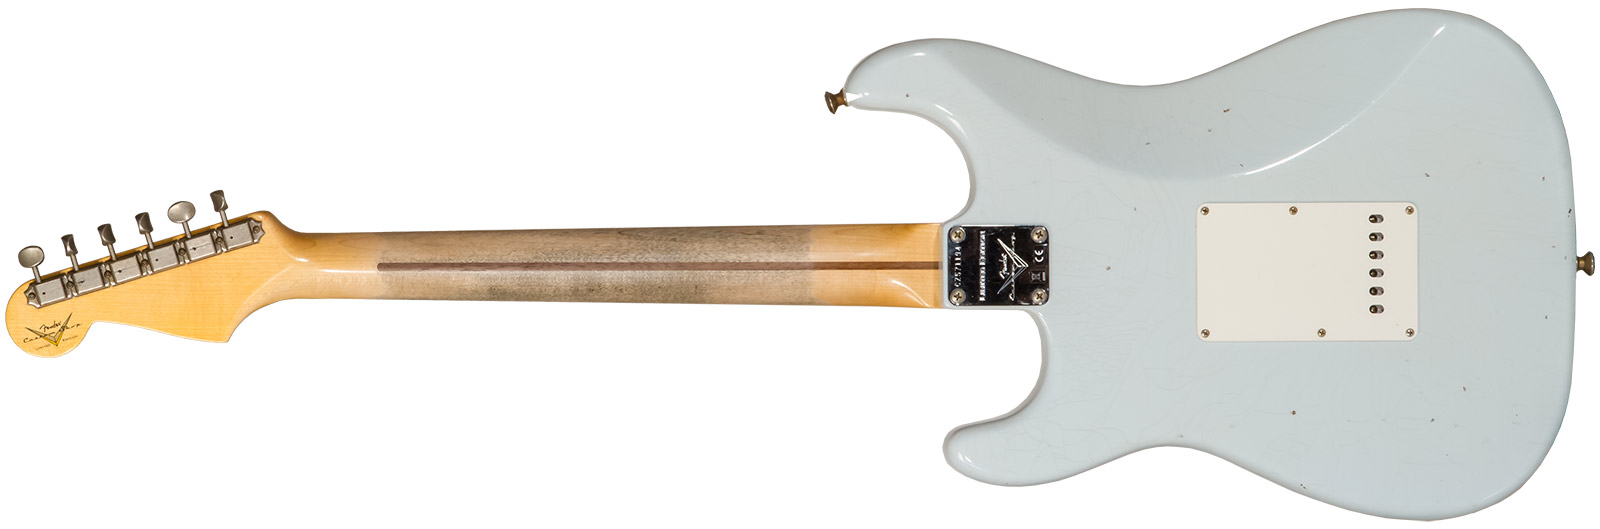 Fender Custom Shop Strat Tomatillo Special 3s Trem Mn #cz571194 - Journeyman Relic Aged Sonic Blue - Guitare Électrique Forme Str - Variation 1